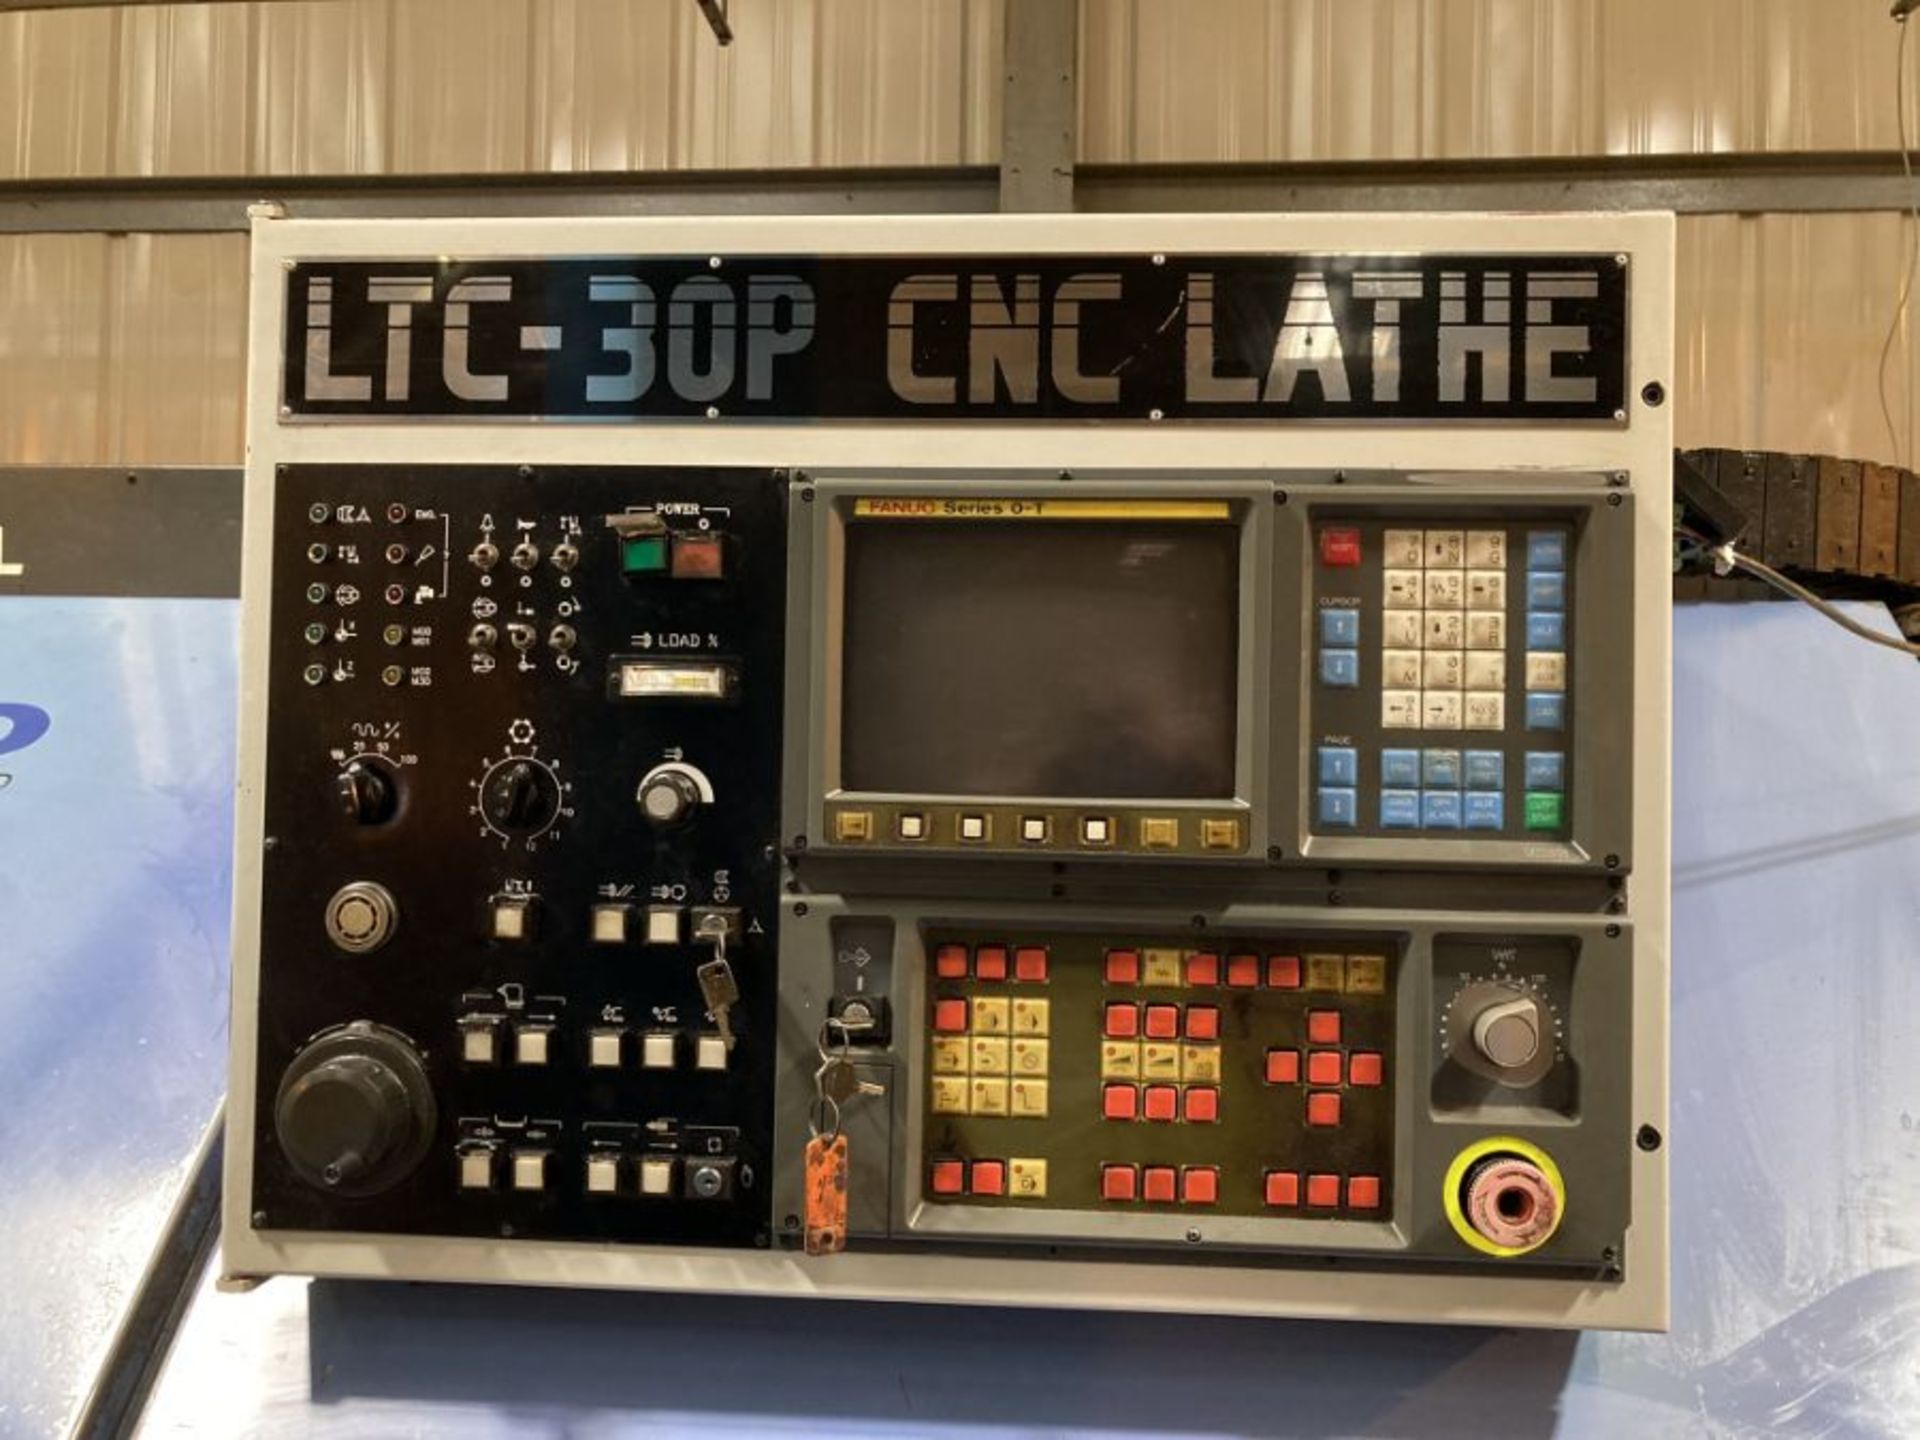 Leadwell model LTC-30BPL CNC lathe (1997) - Image 4 of 15